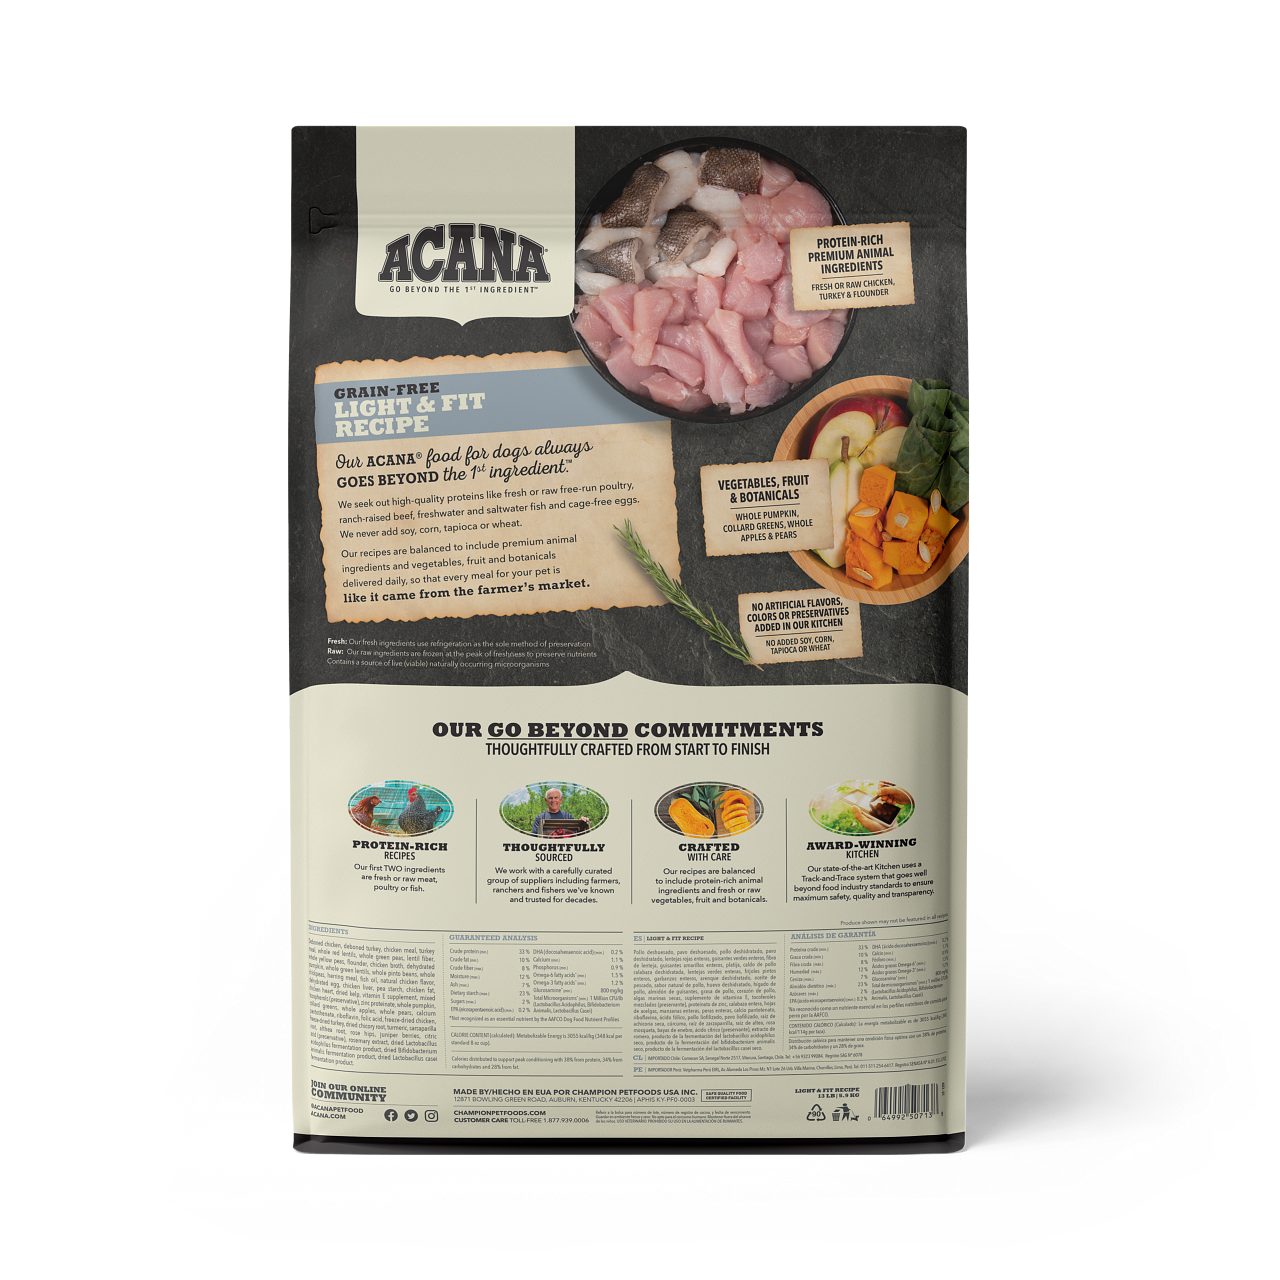 Acana Dry Dog Food Light & Fit